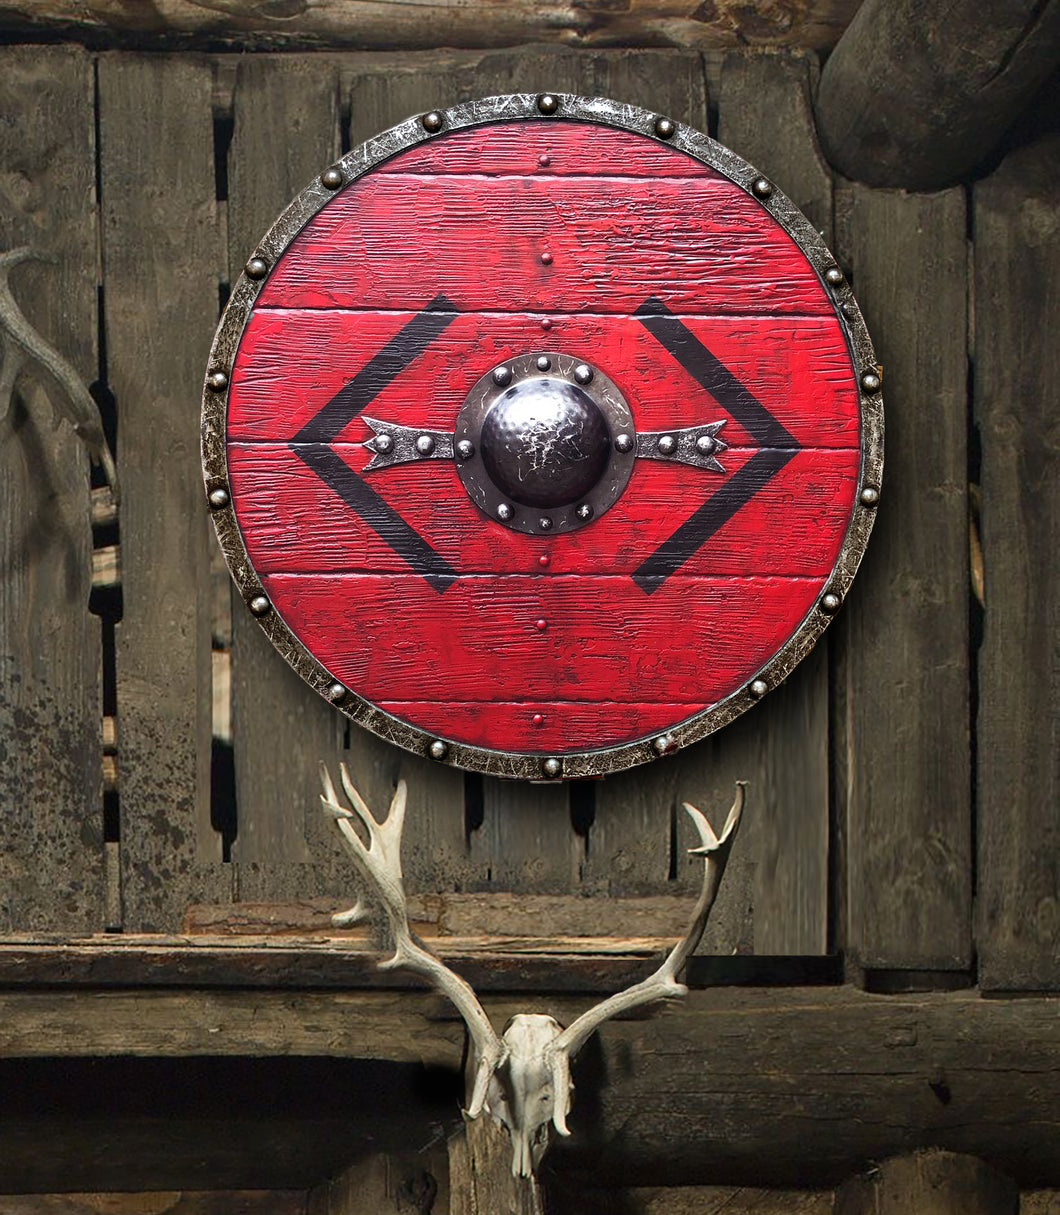 Bjorn Ironside Battleworn Viking Shield